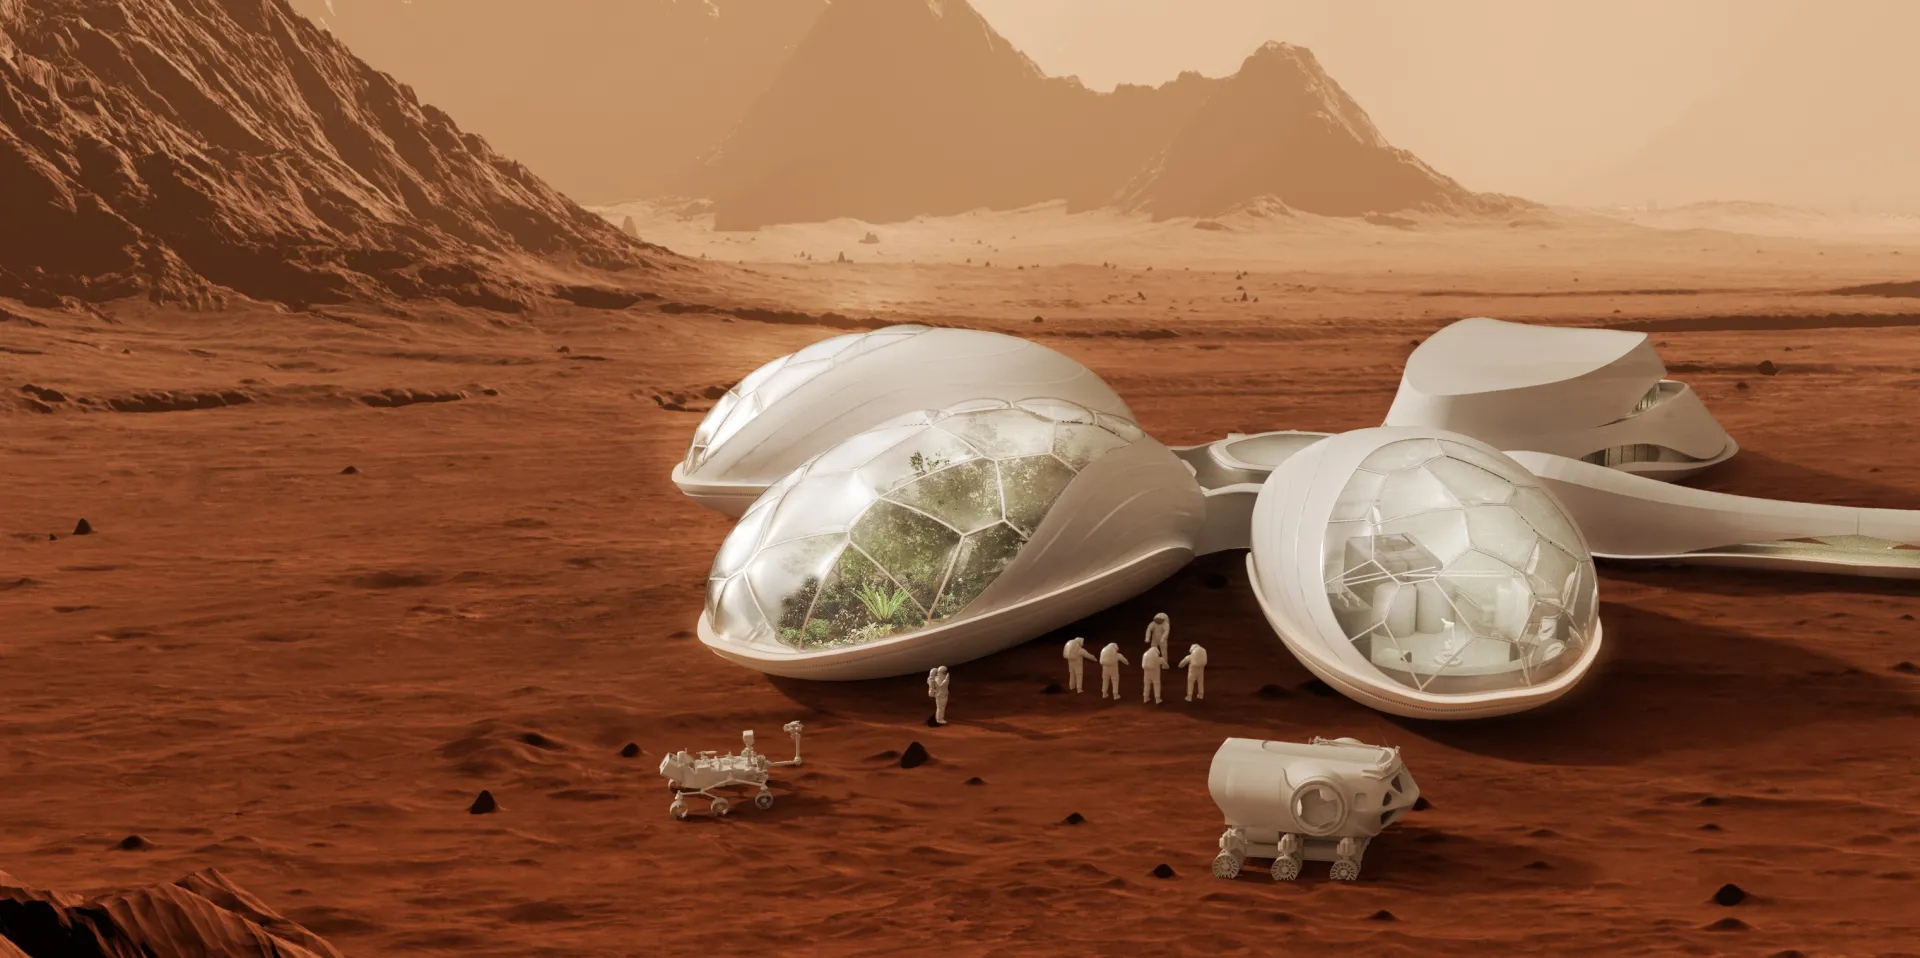 Interstellar Lab’s BioPod enables agriculture on Mars